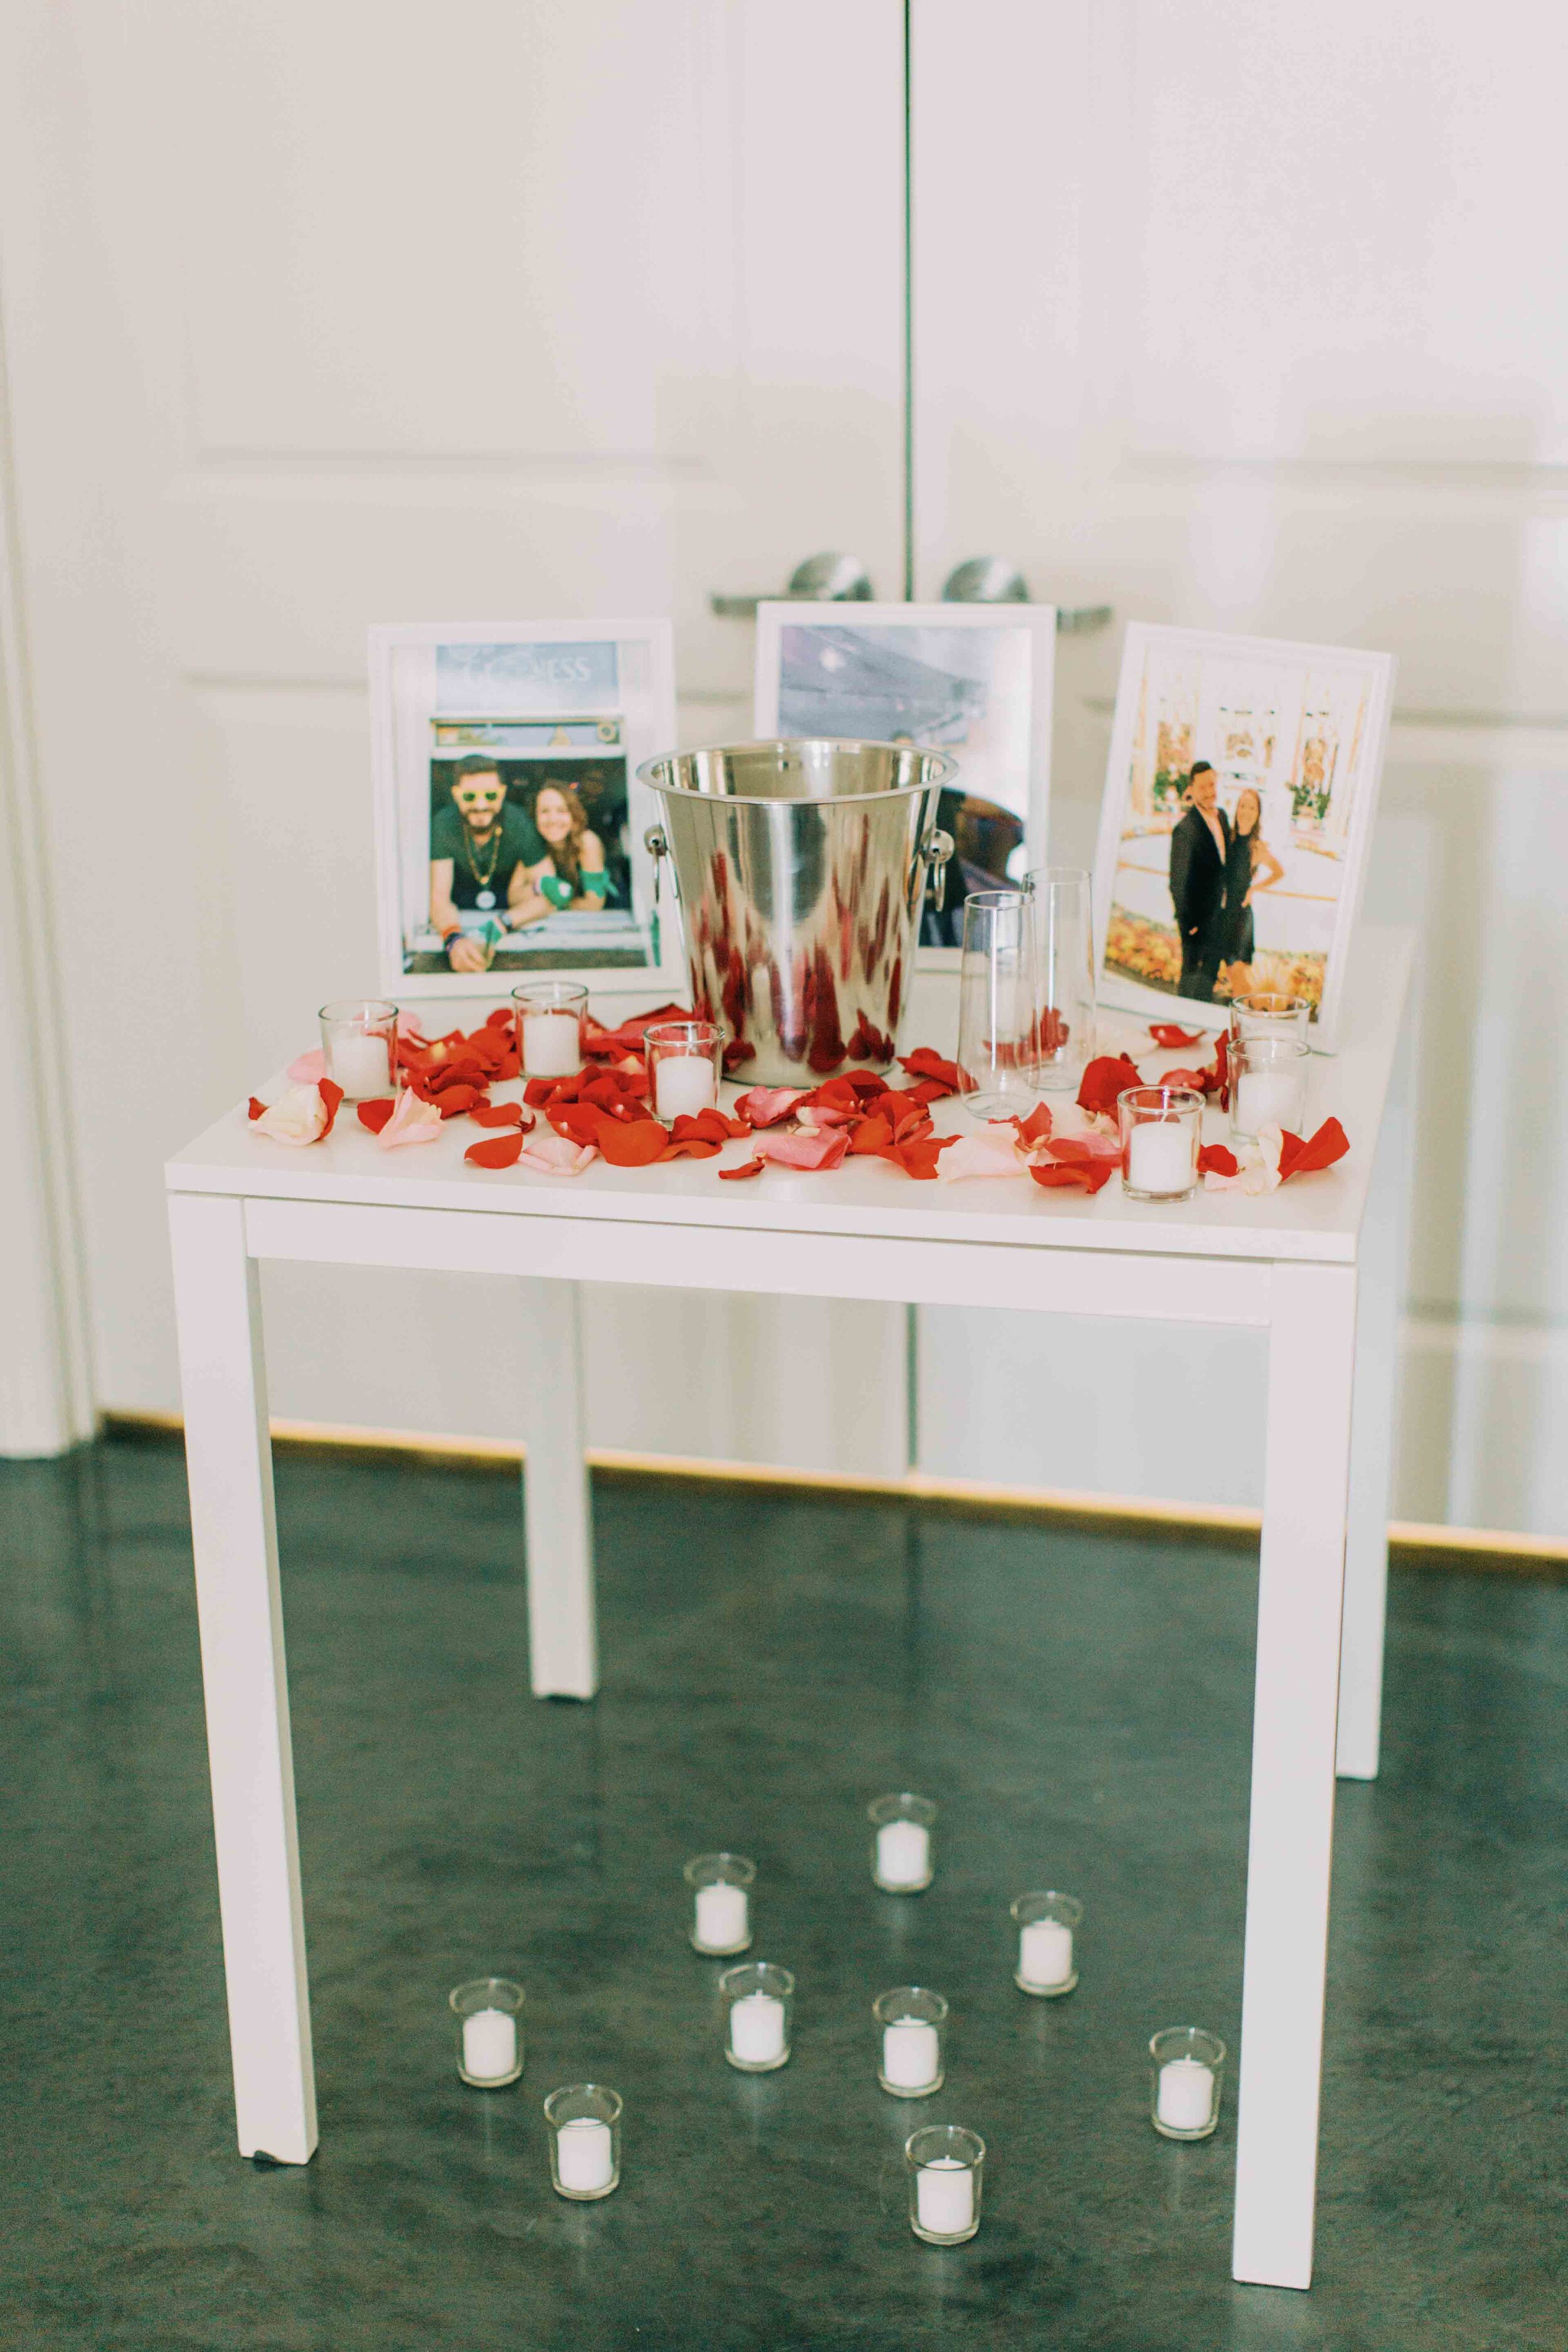 table display of memories in frames and romantic petals